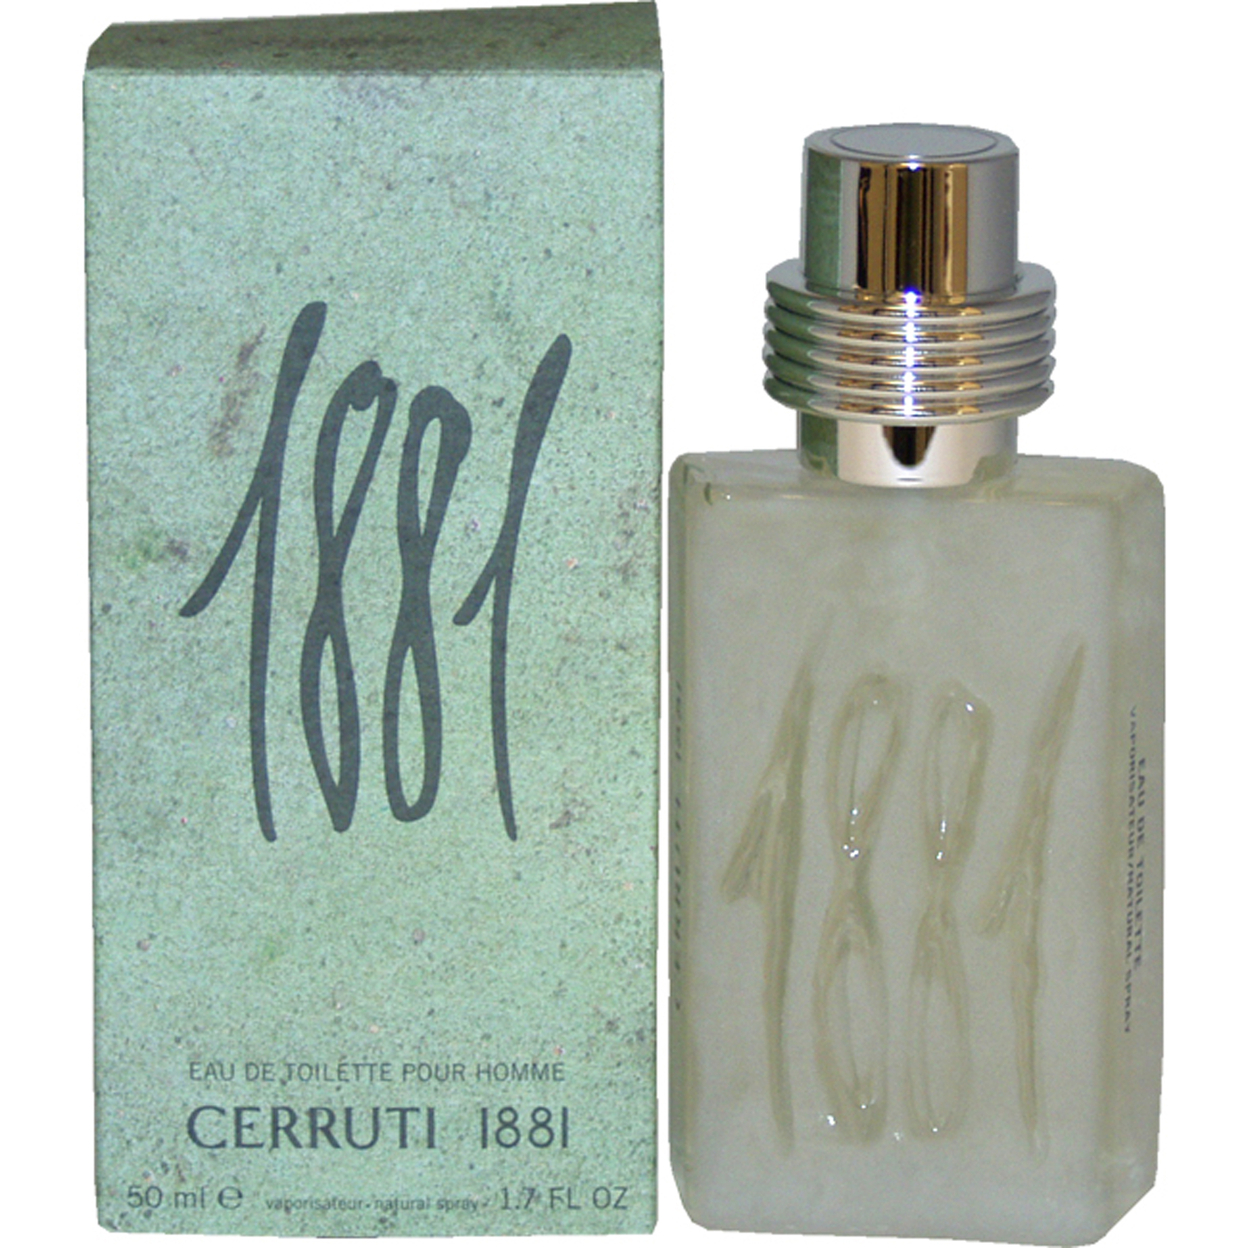 Nino Cerruti 1881 EDT Spray 1.7 Oz